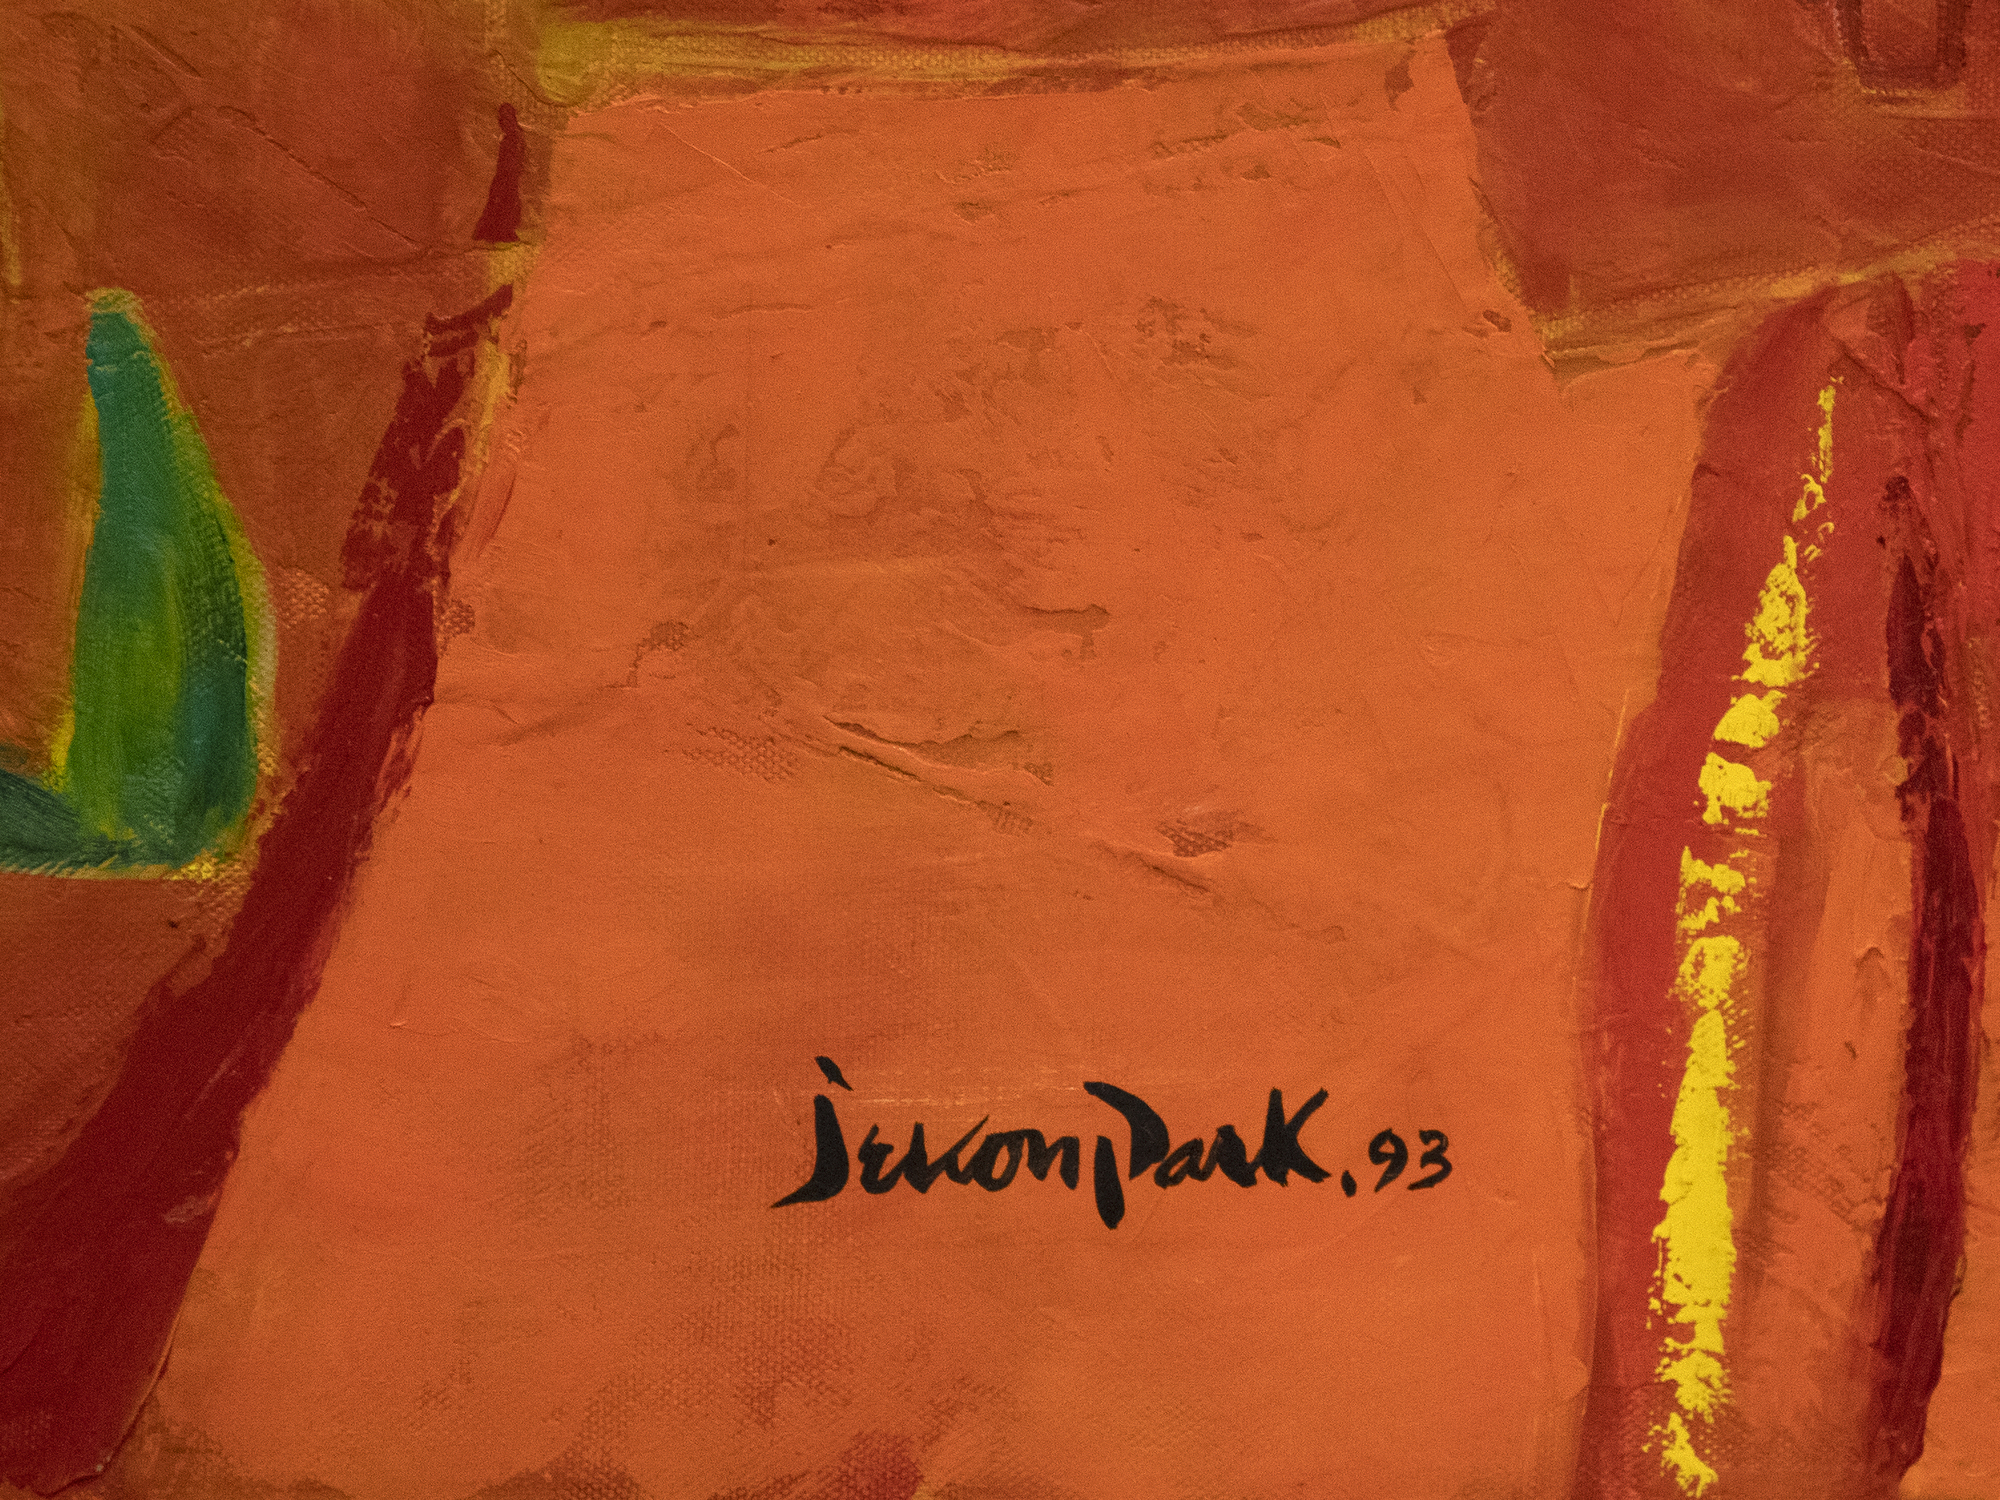 JAE KON PARK - Ohne Titel - Öl auf Leinwand - 51 1/4 x 64 in.